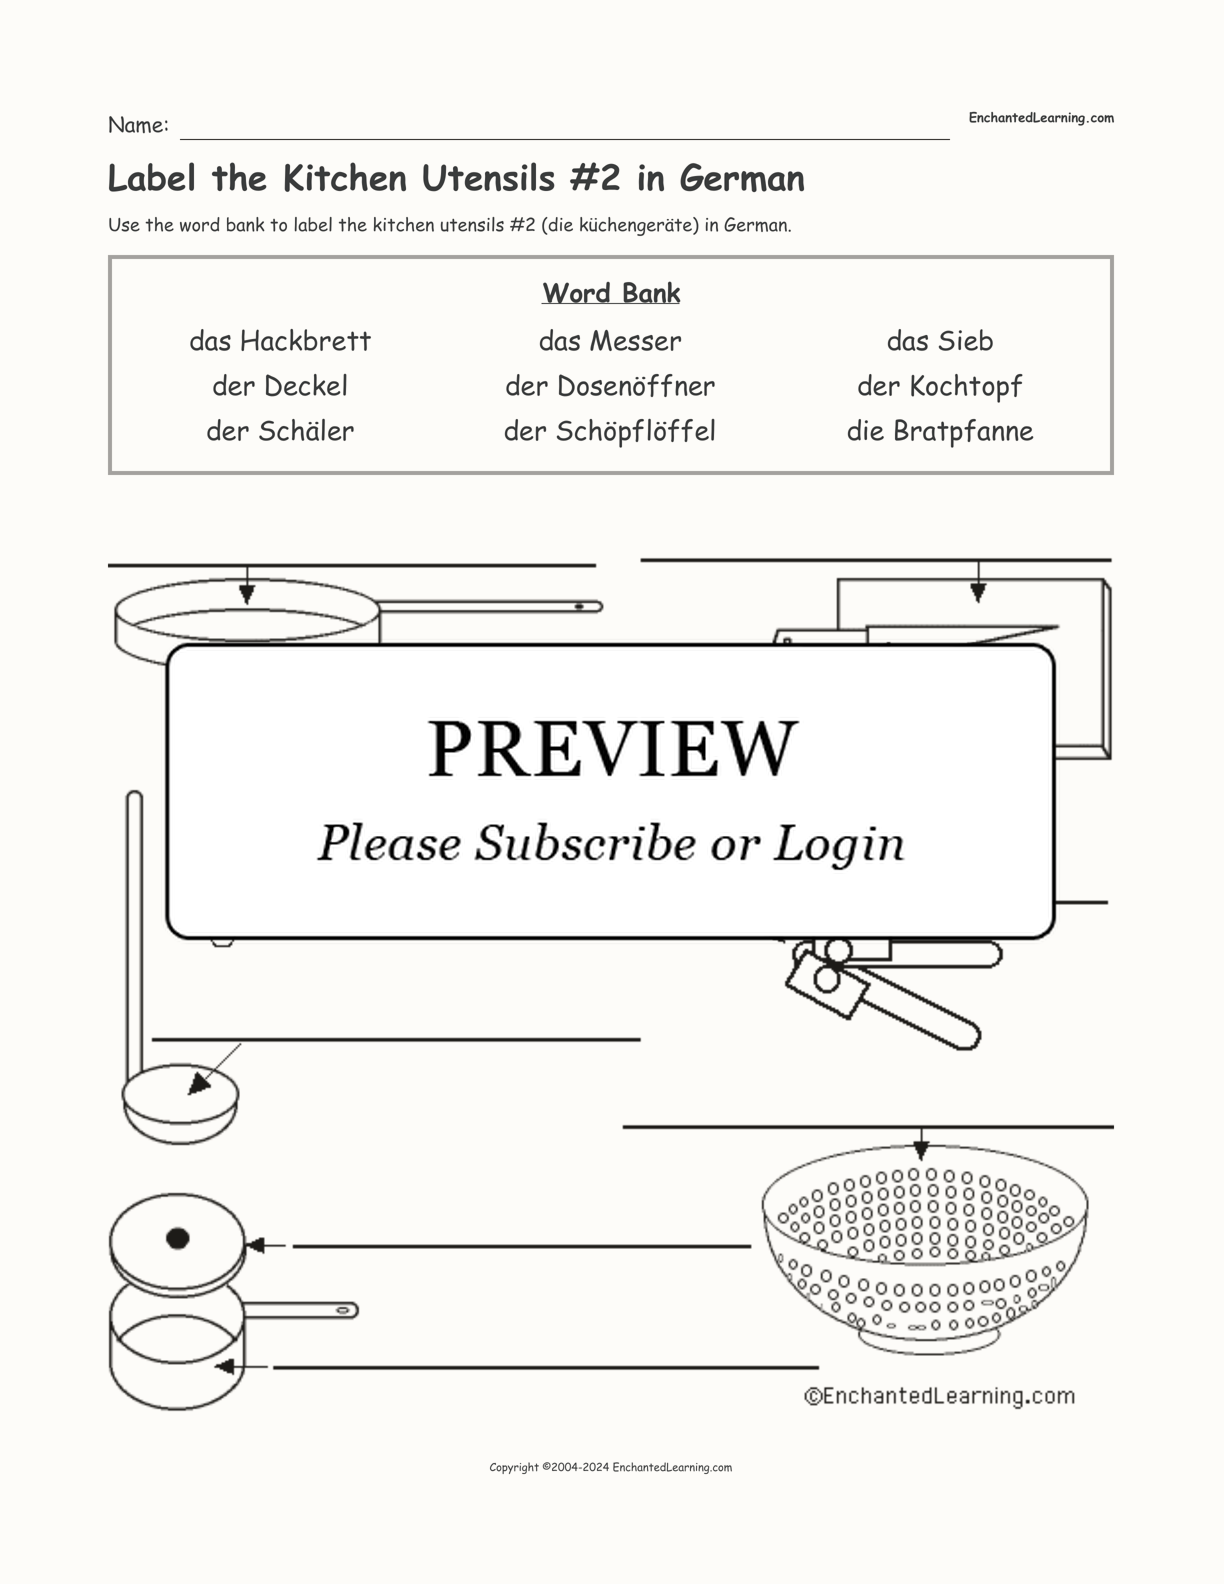 Label the Kitchen Utensils #2 in German interactive worksheet page 1